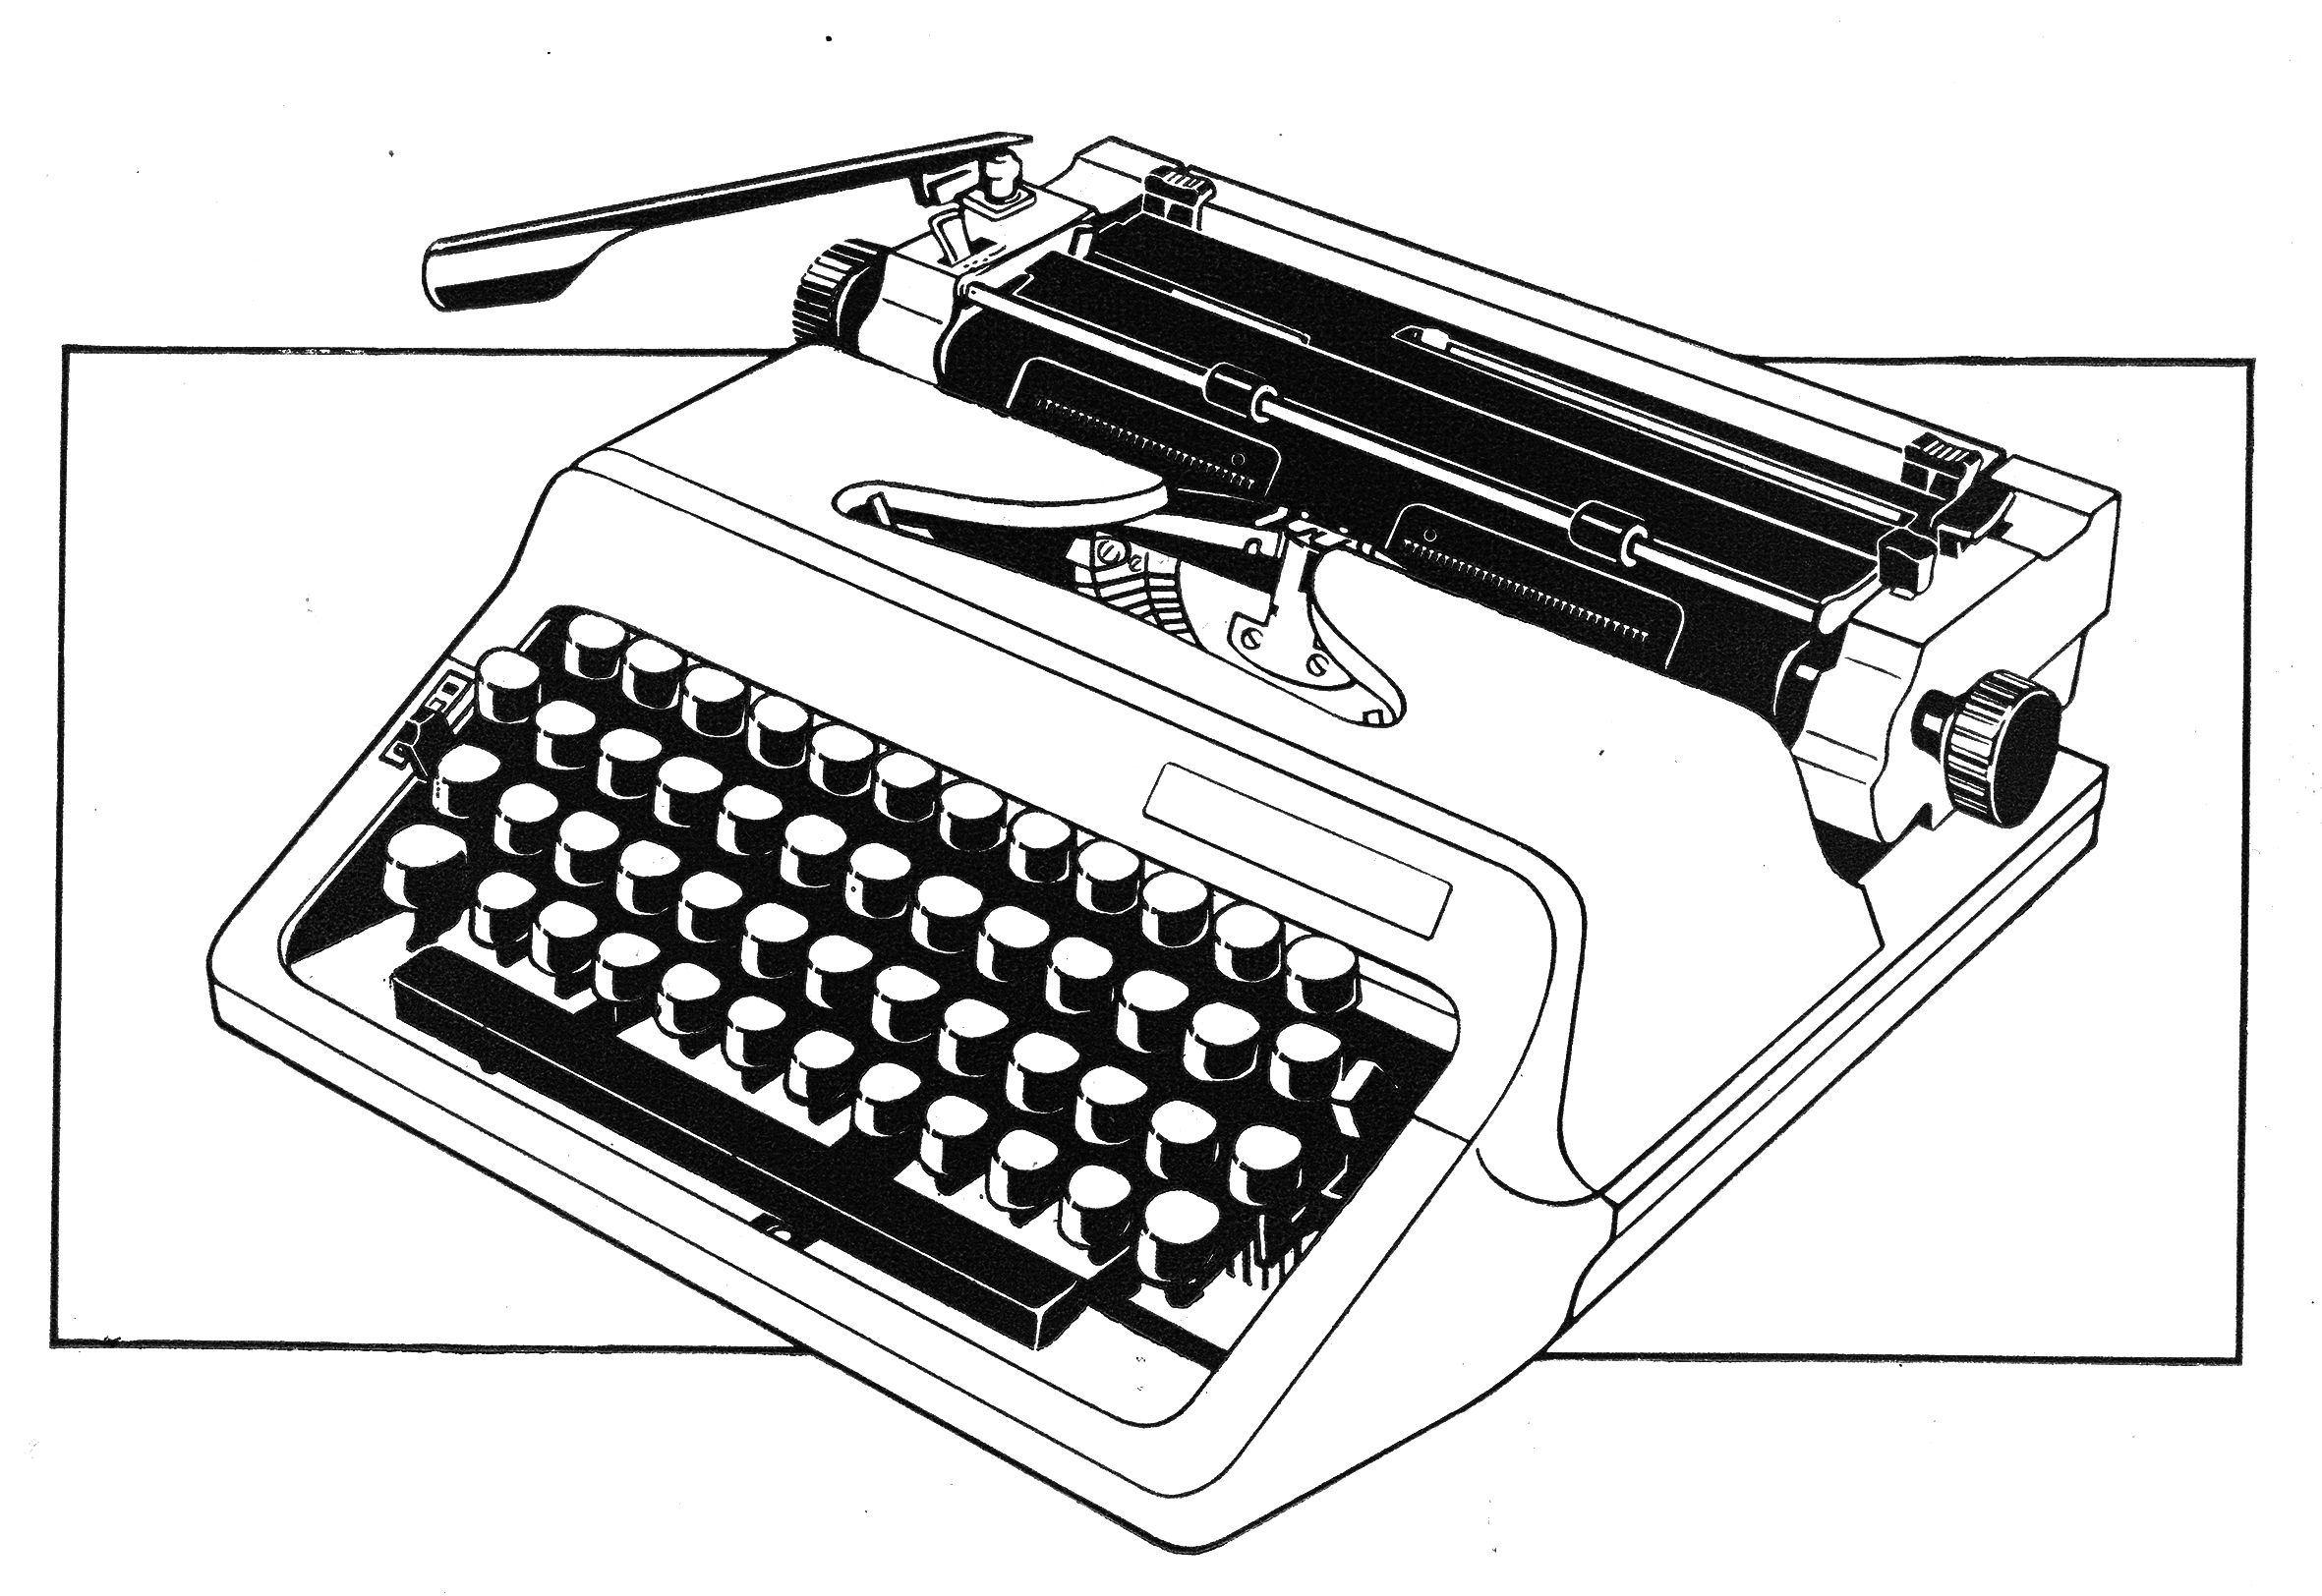 Optima Typewriter Image 01 small BW